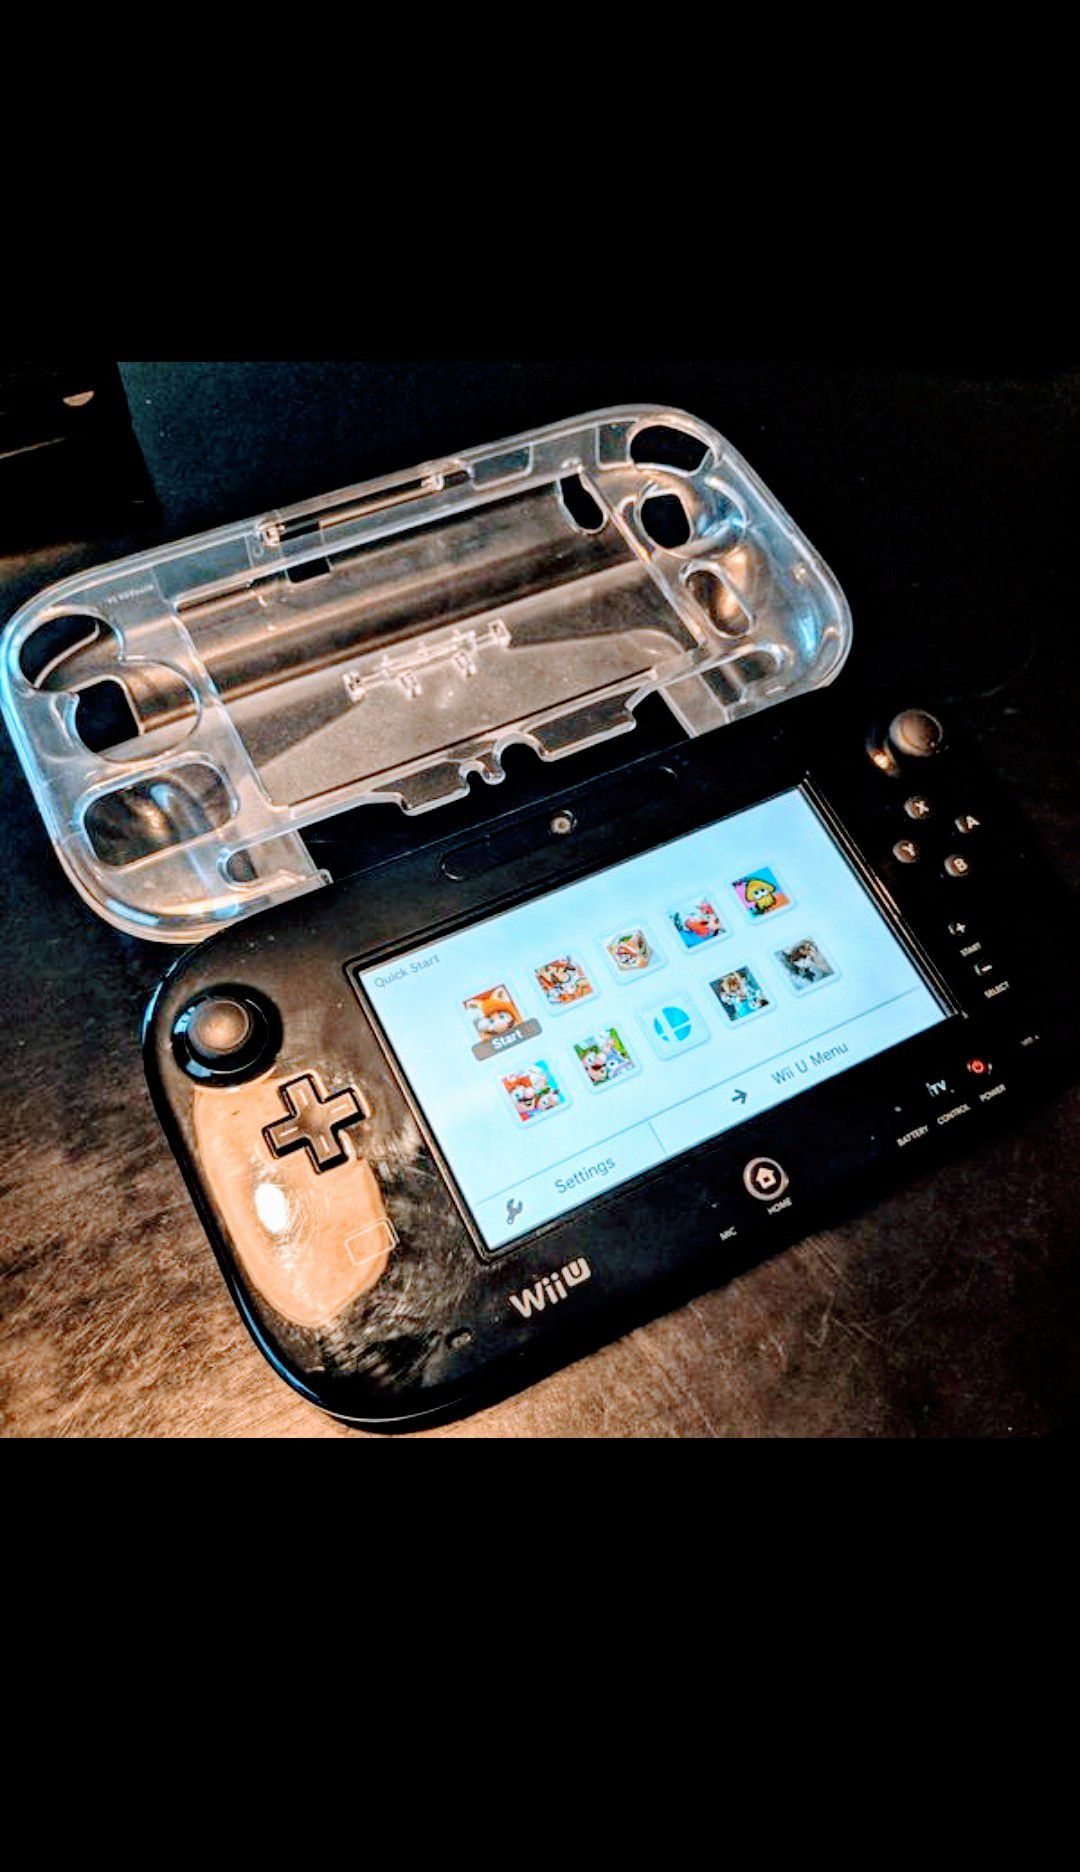 Wii U 32+128GB Modded with 51 games! - Zelda Breath of the Wild, Super Mario 3D World, Super Smash Bros, Splatoon, Mario Kart 8, Mario Party 10